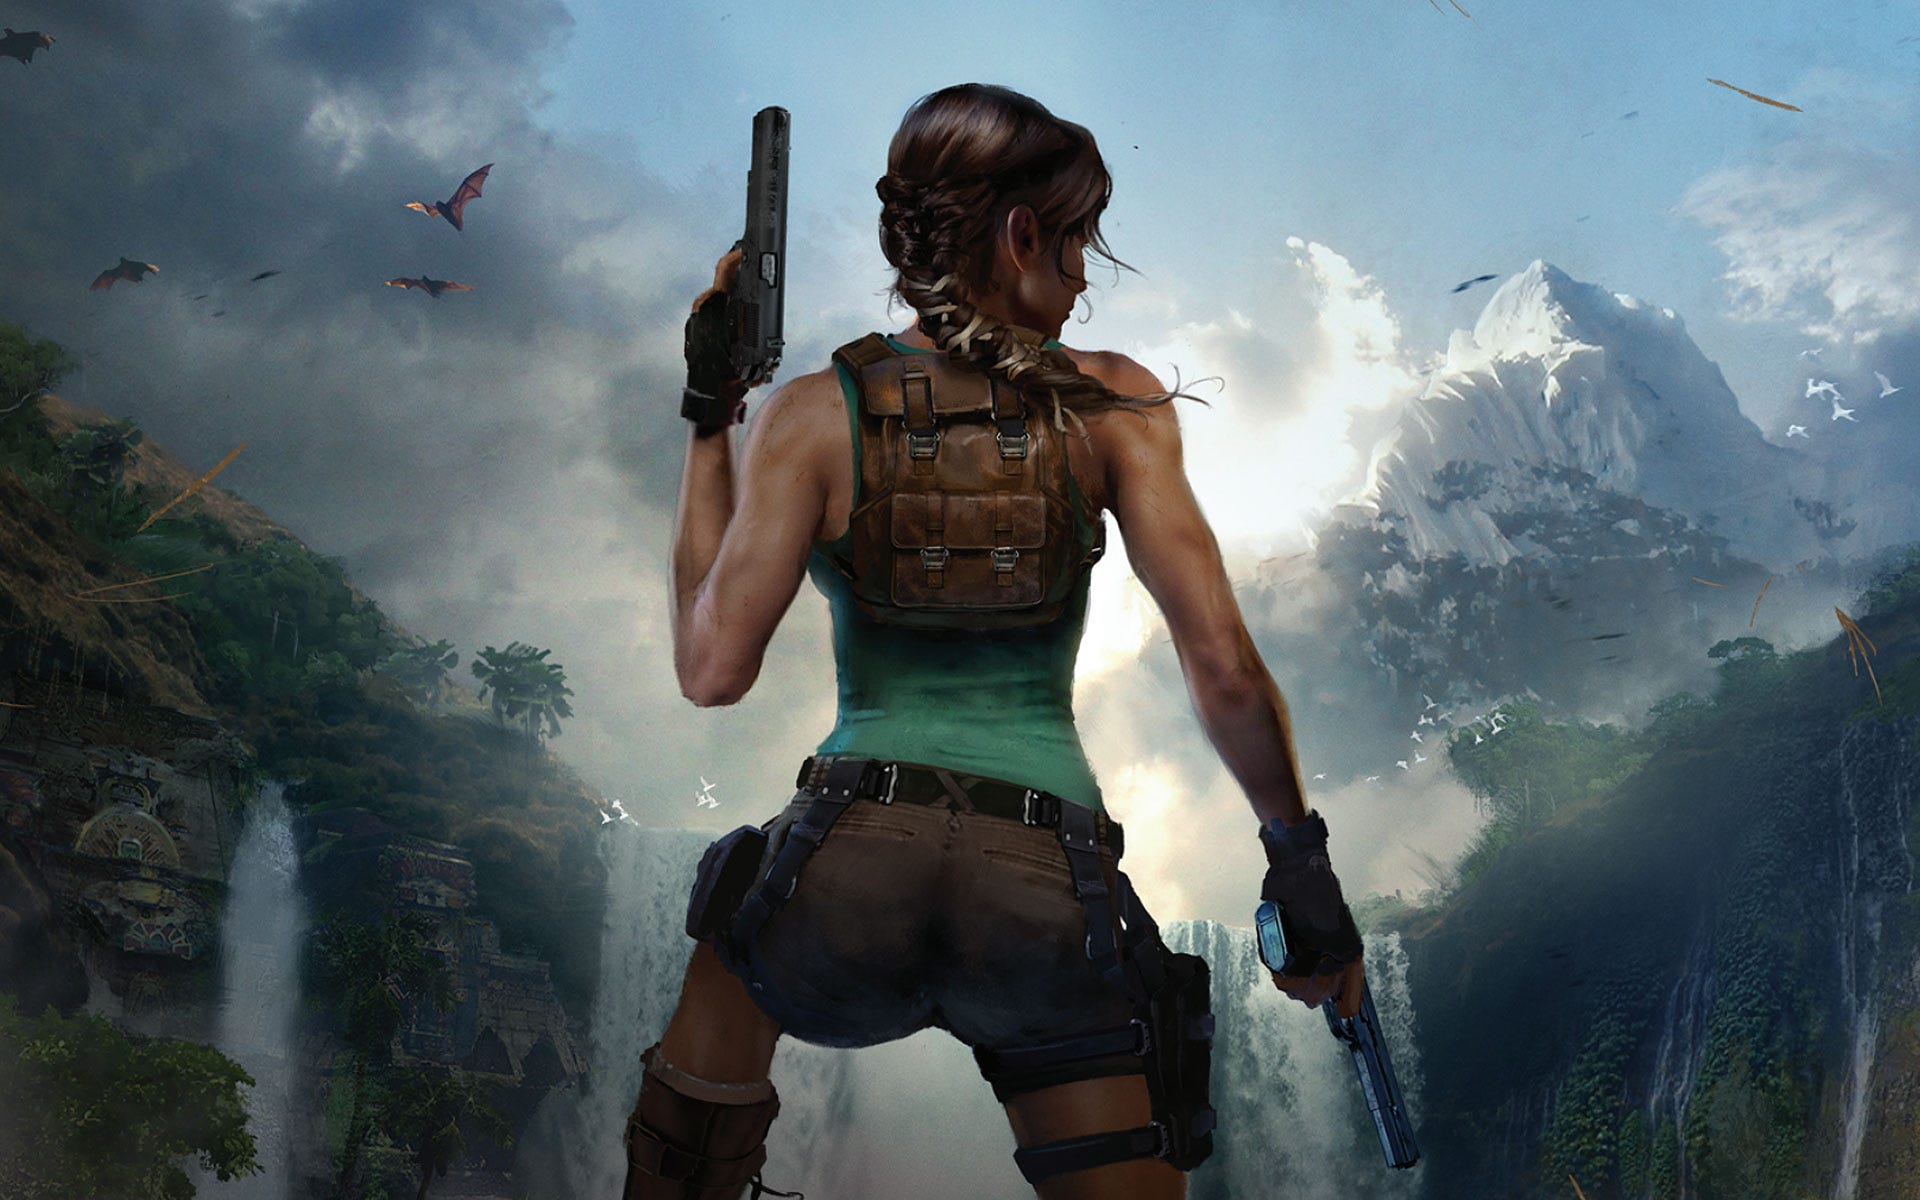 Lara Croft, British adventurer and game icon, age 25